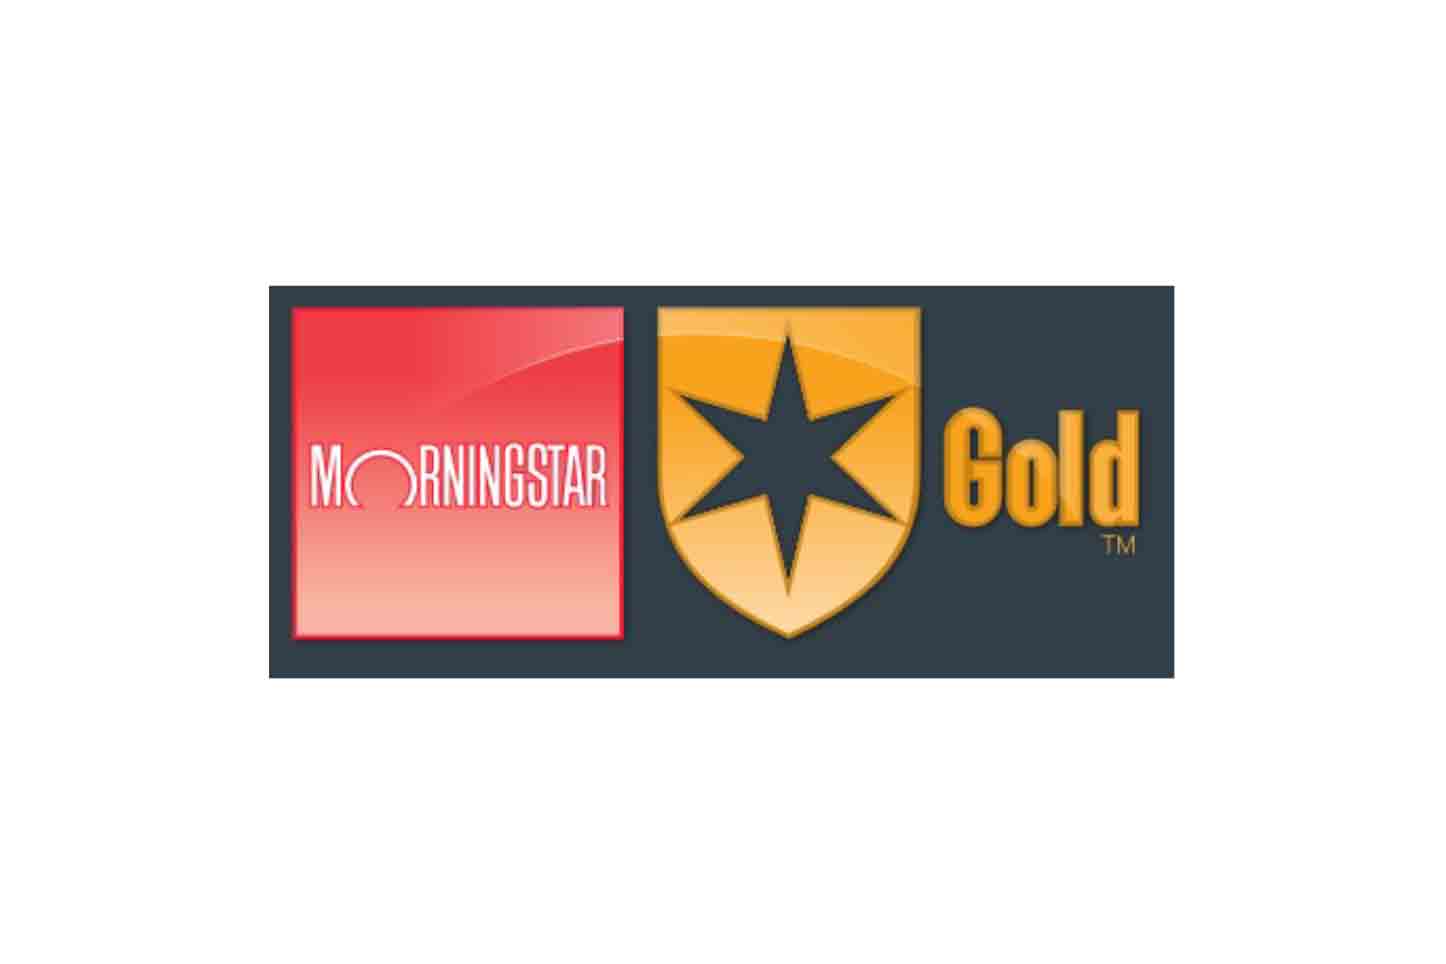 Mornigstar Gold 